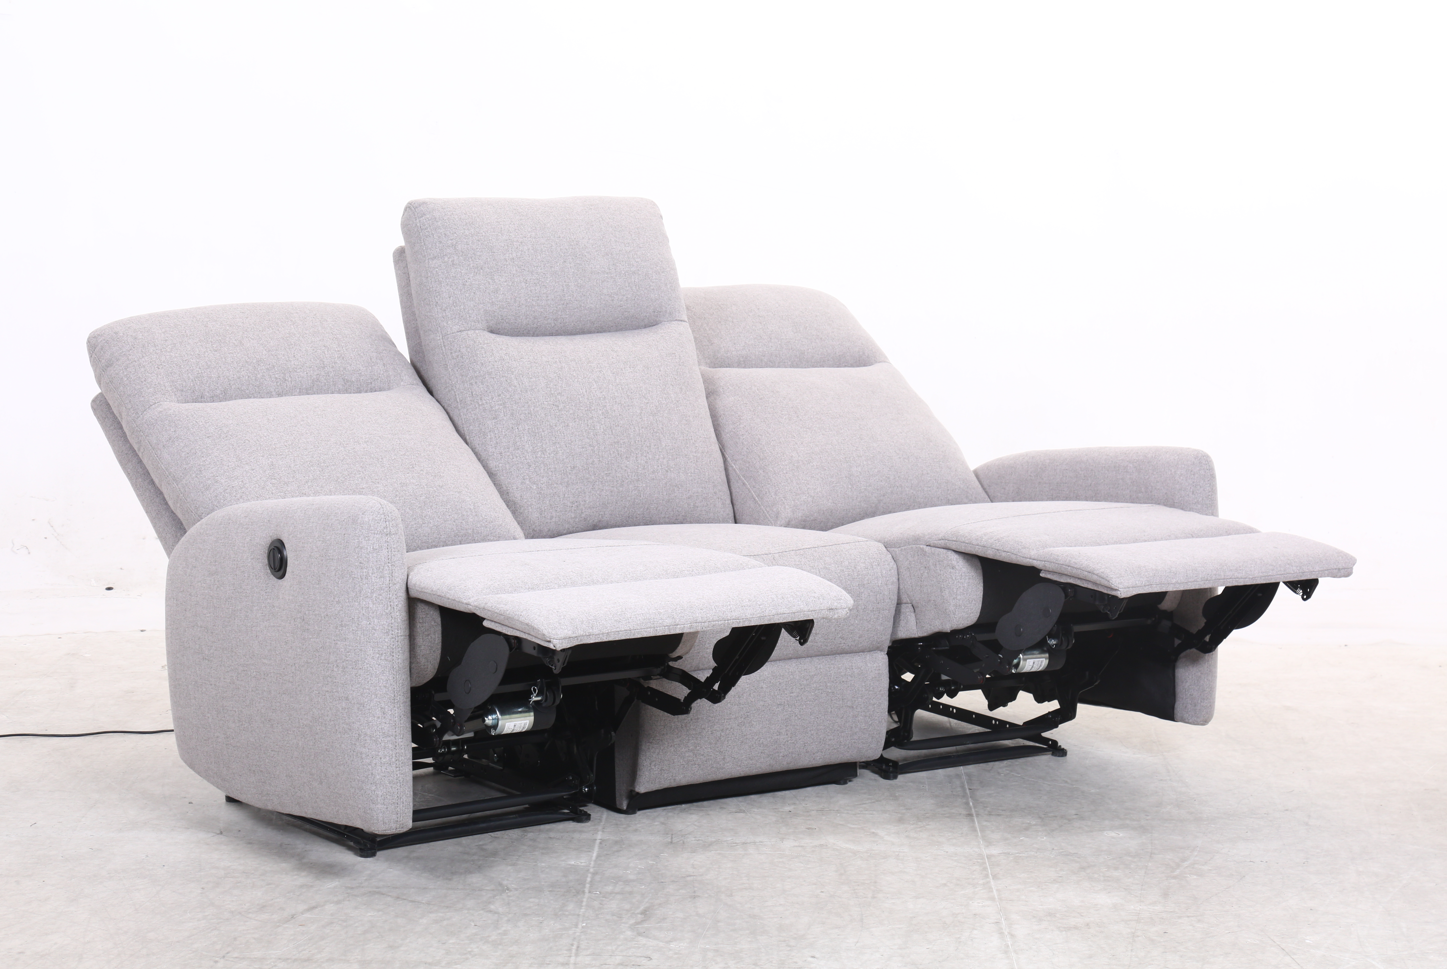 Lalas - 3-seater Recliner (Light Grey Fabric) - 47895